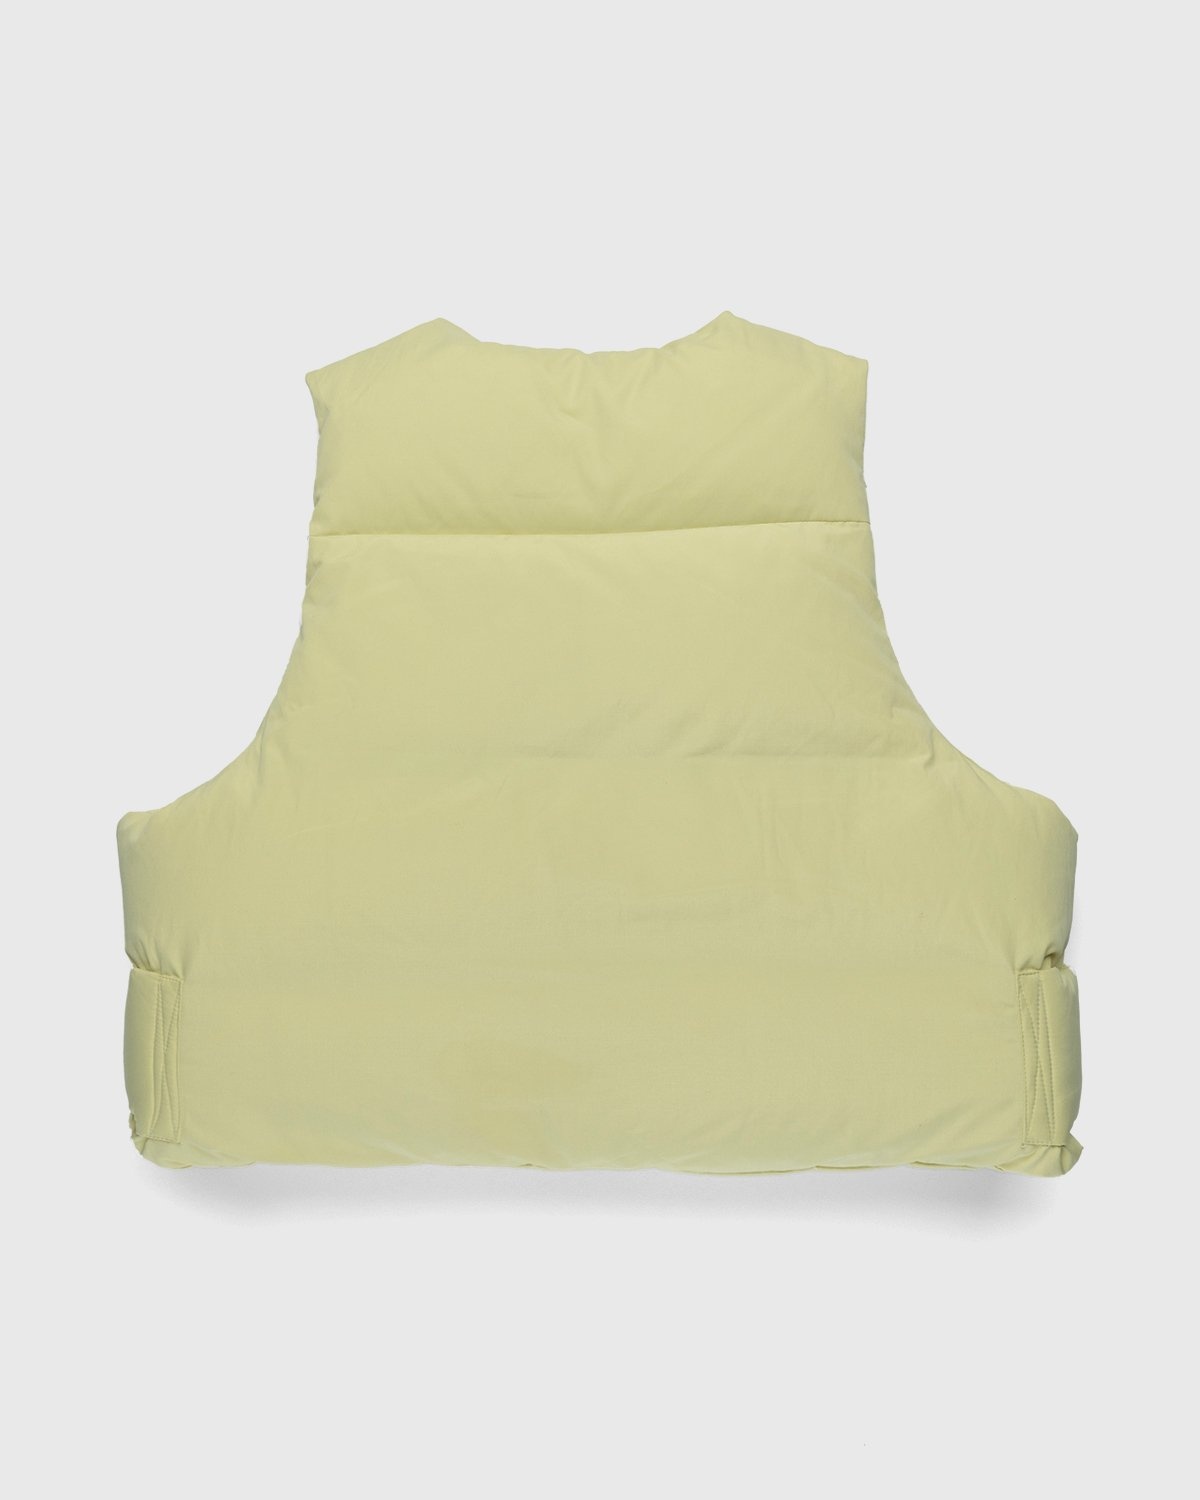 Entire Studios – Pillow Vest Blonde - Outerwear - Yellow - Image 2